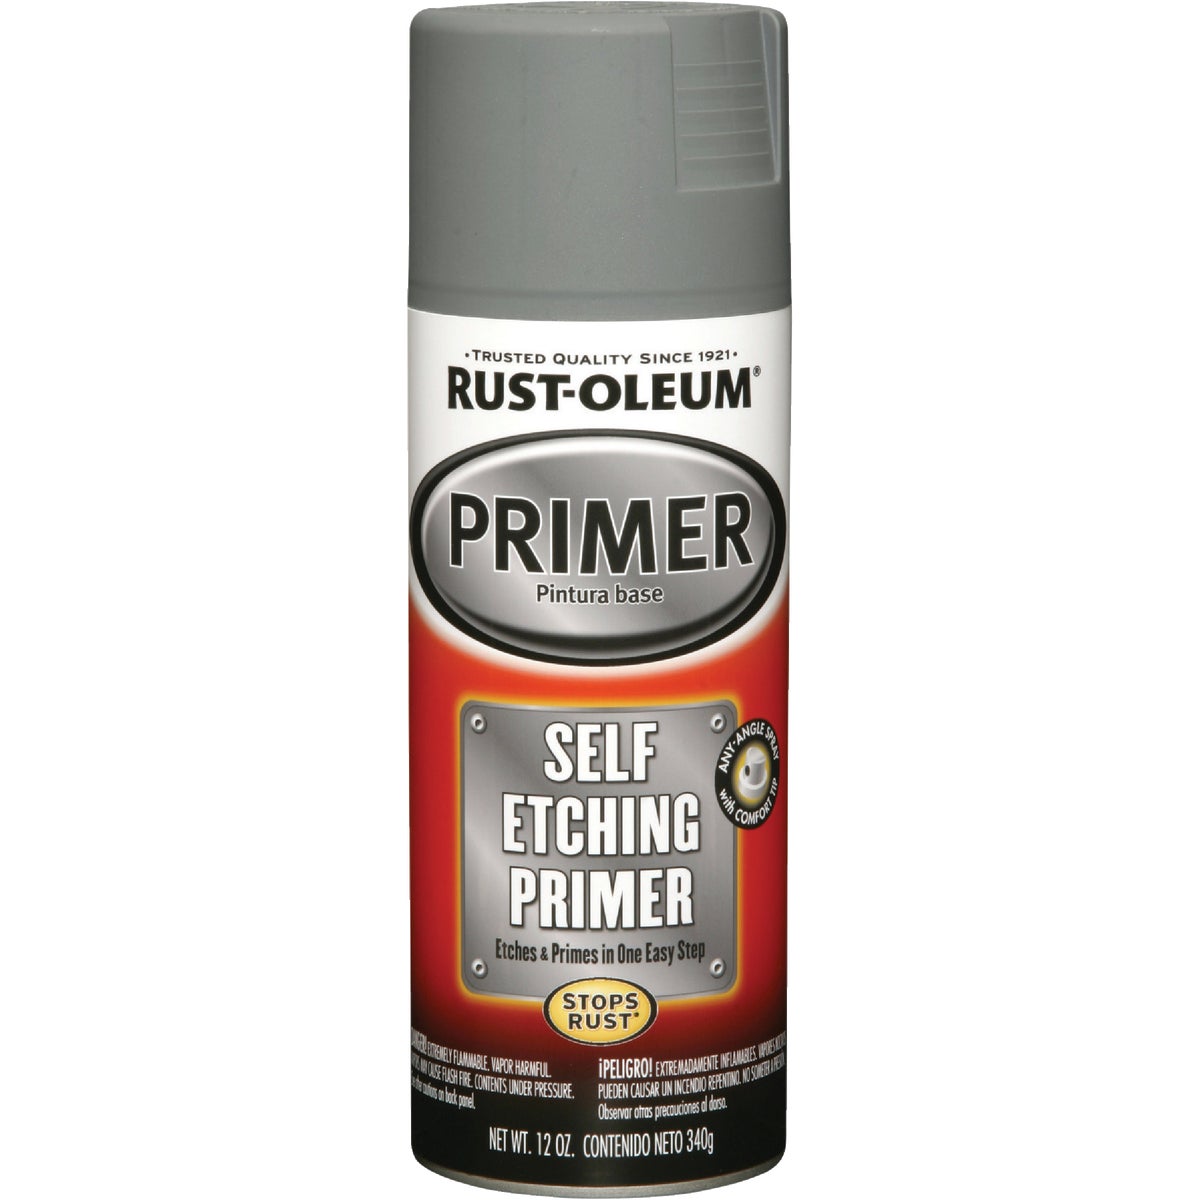 Item 771278, Rust-Oleum Self Etching Primer prepares bare metal, aluminum and fiberglass